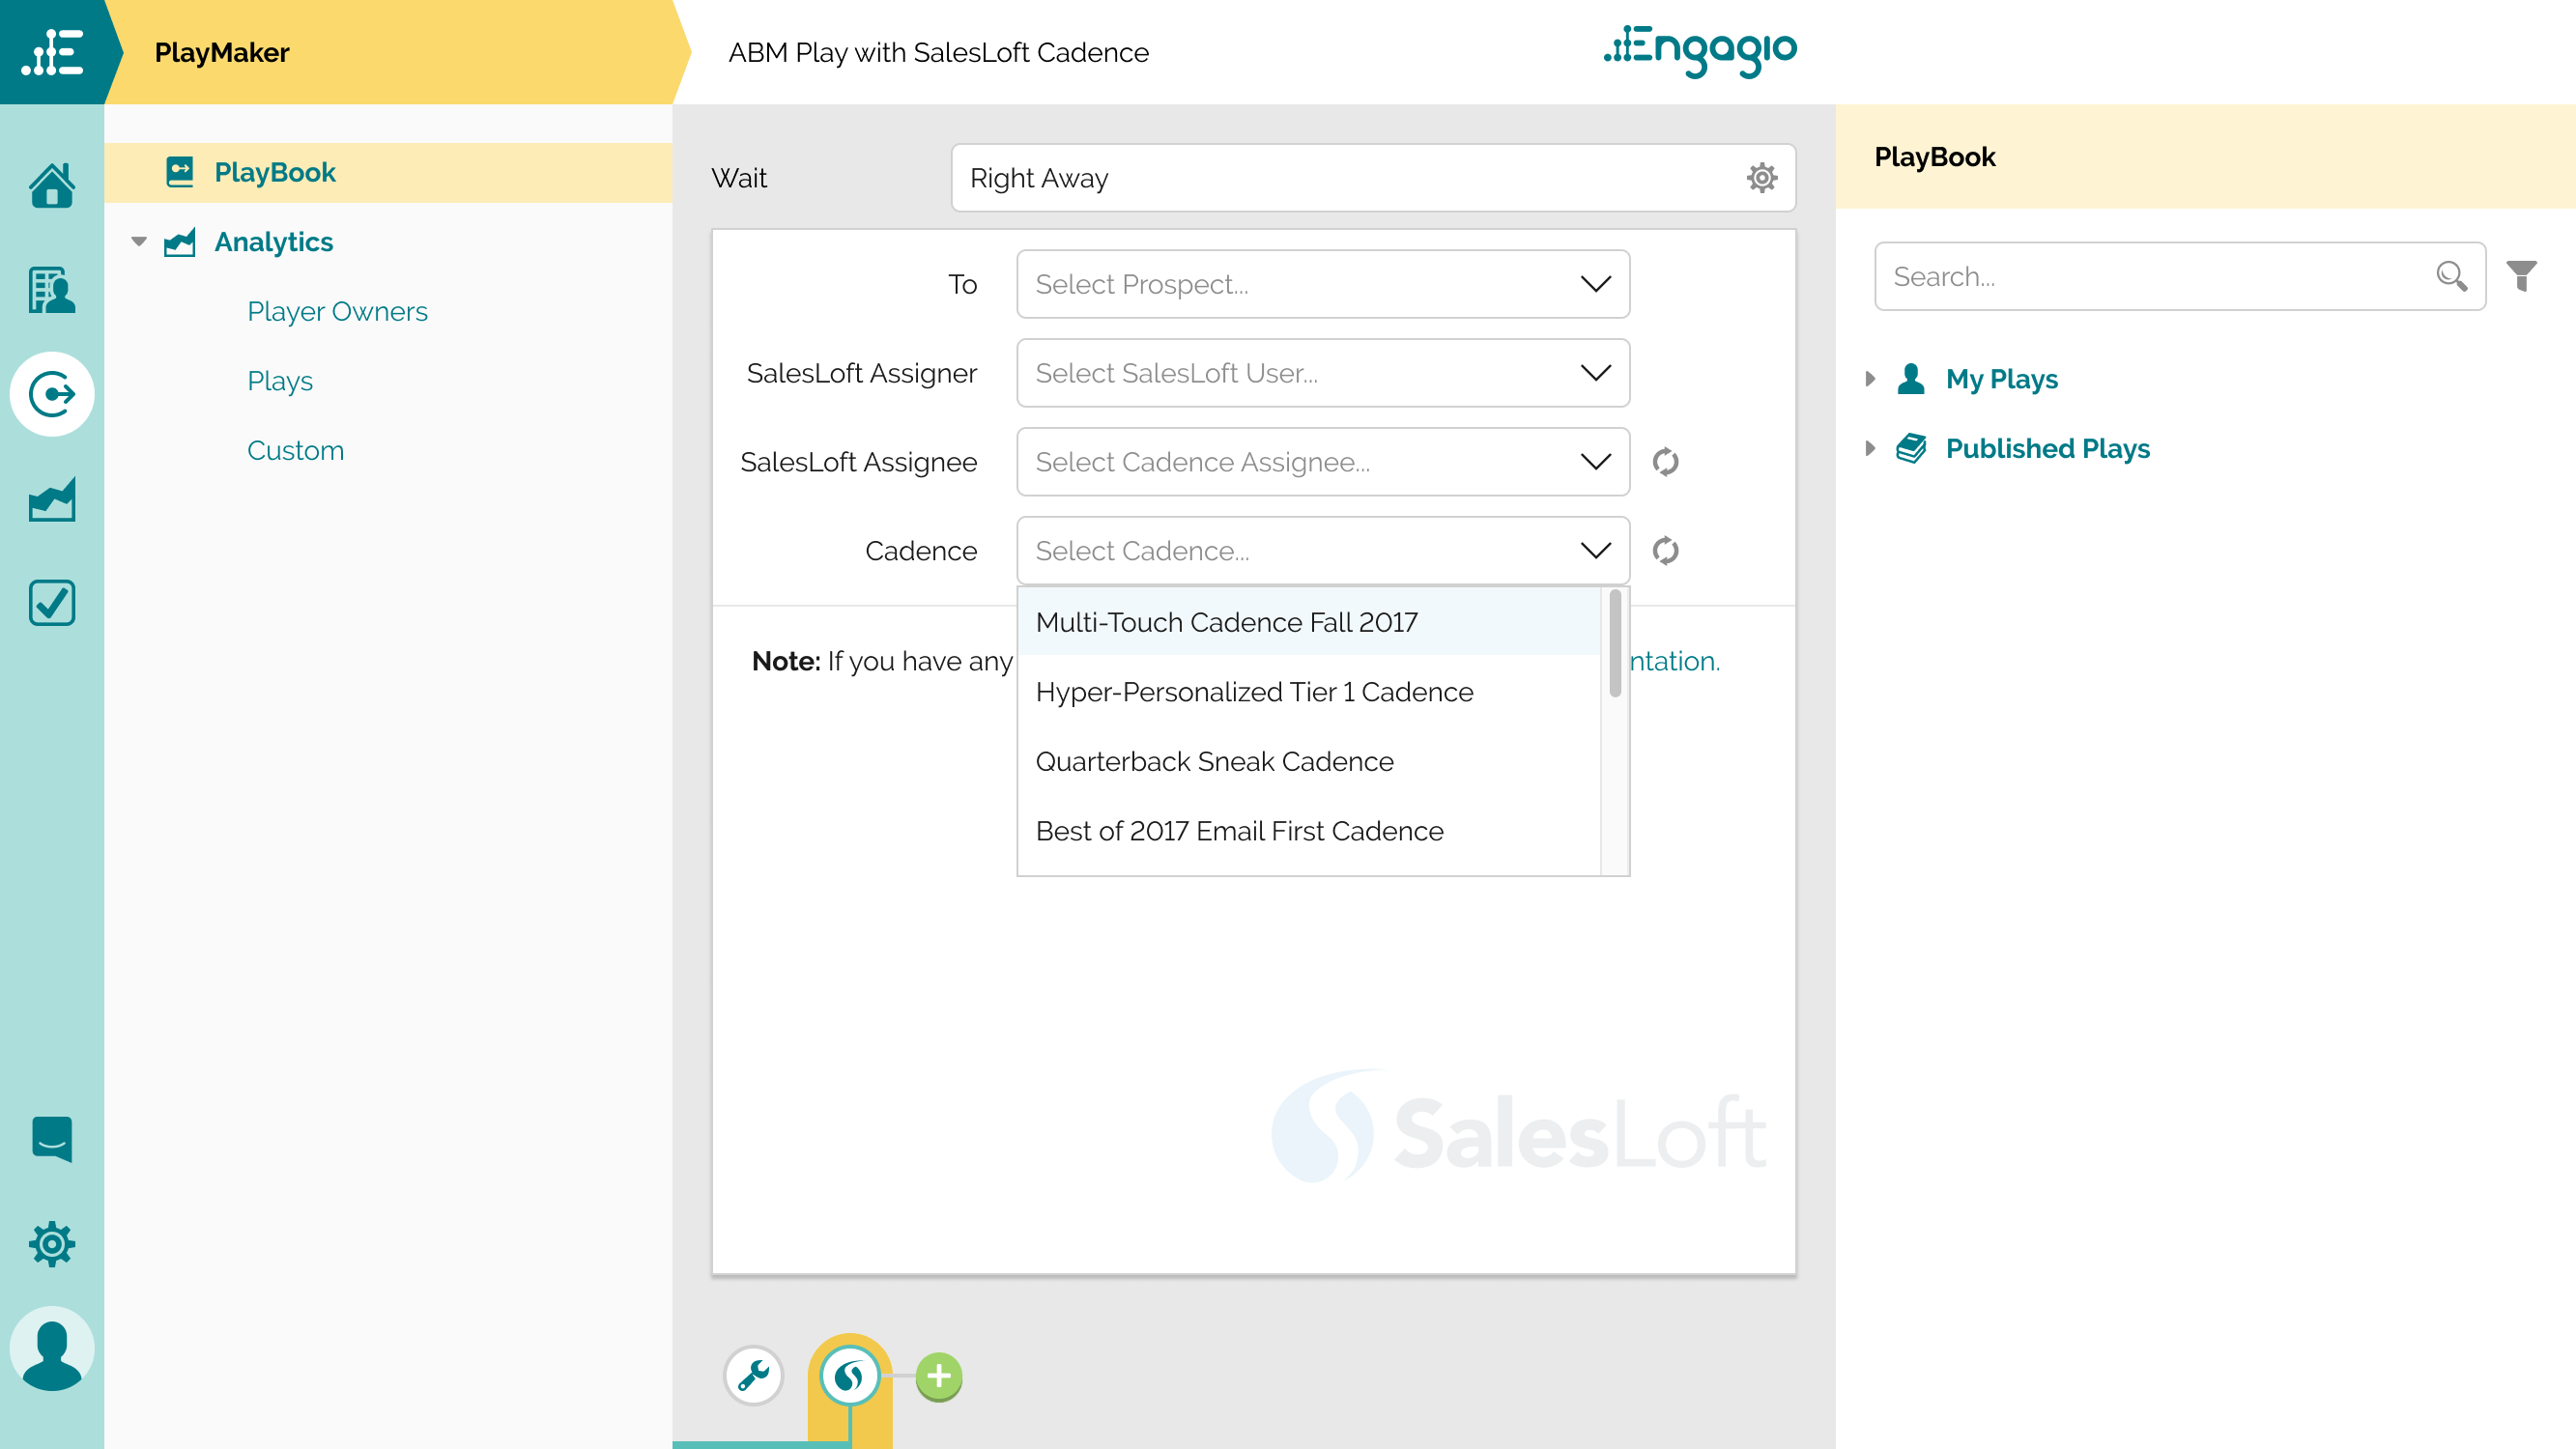 Engagio Logo - Engagio PlayMaker now integrates with the SalesLoft platform